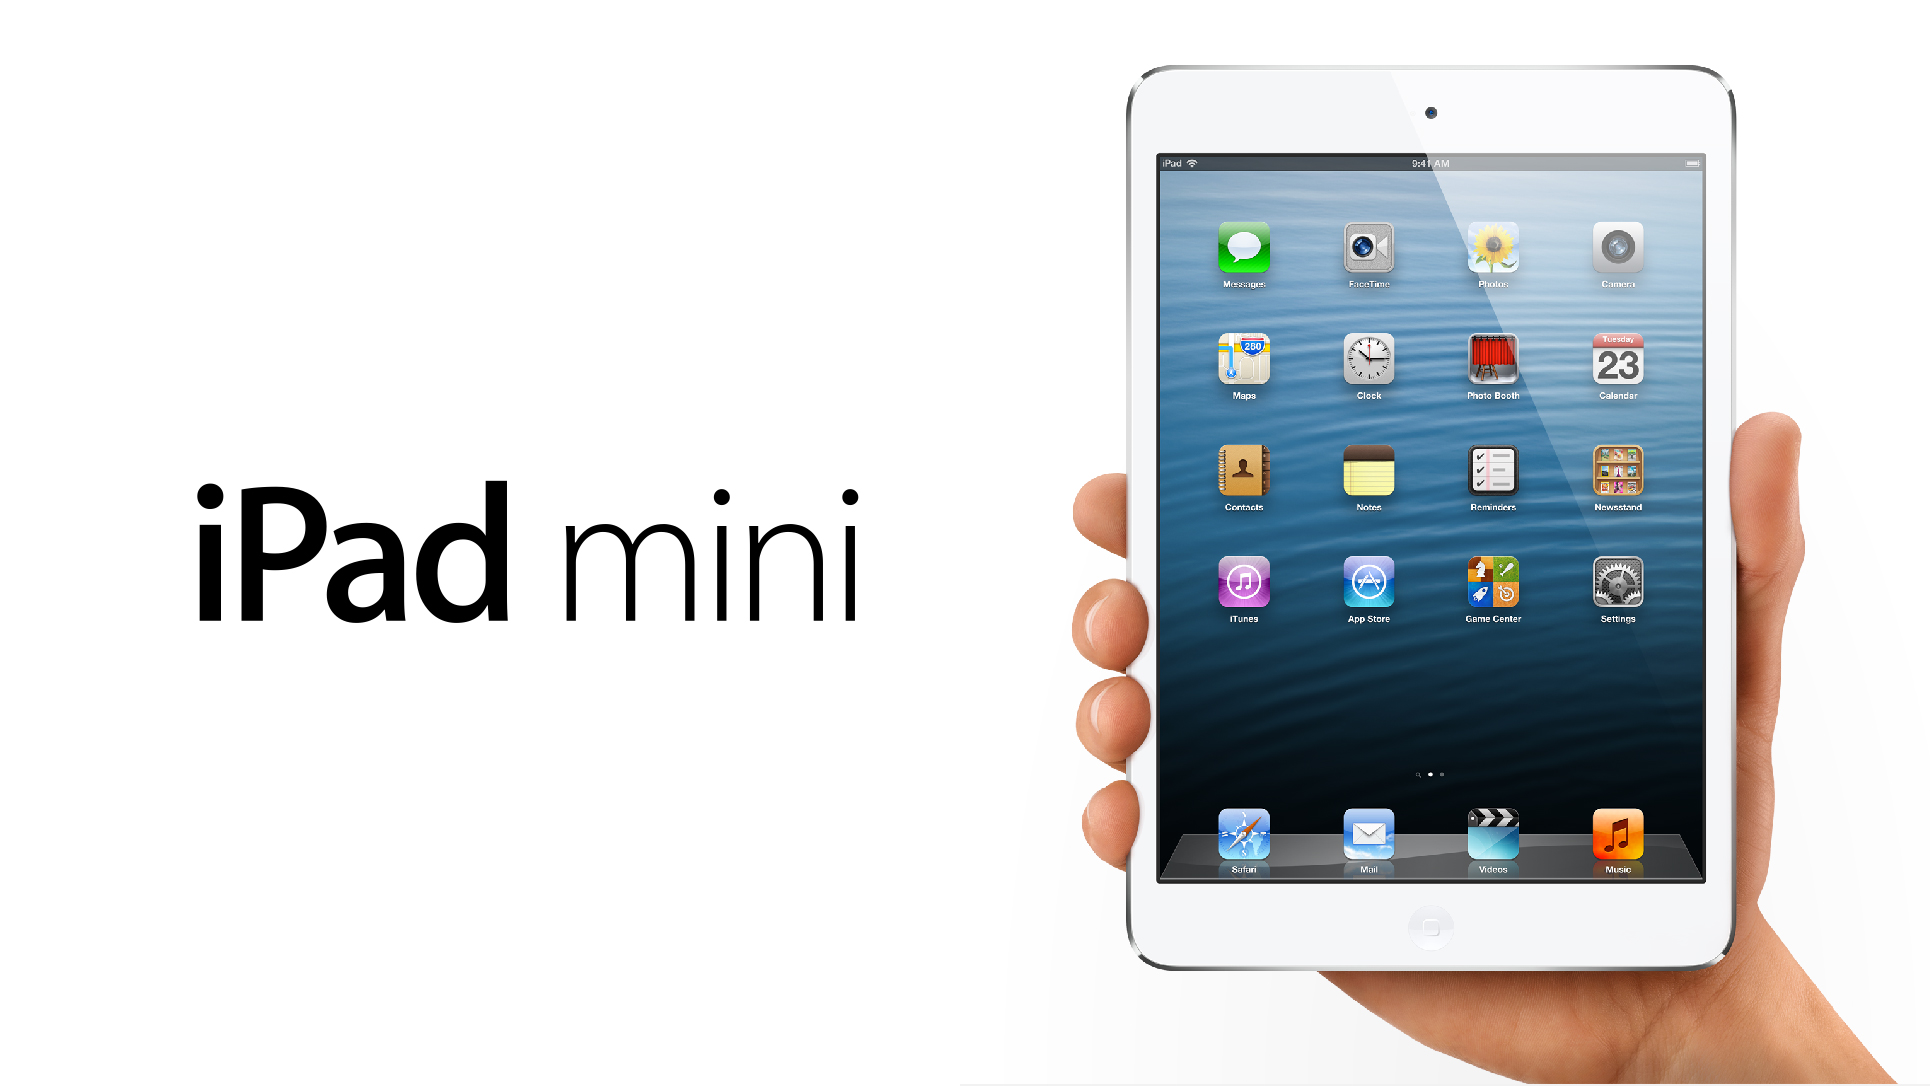 Apple Reveals iPad Mini 3 and It Features the Exact Same Internal Hardware as the iPad Mini 2